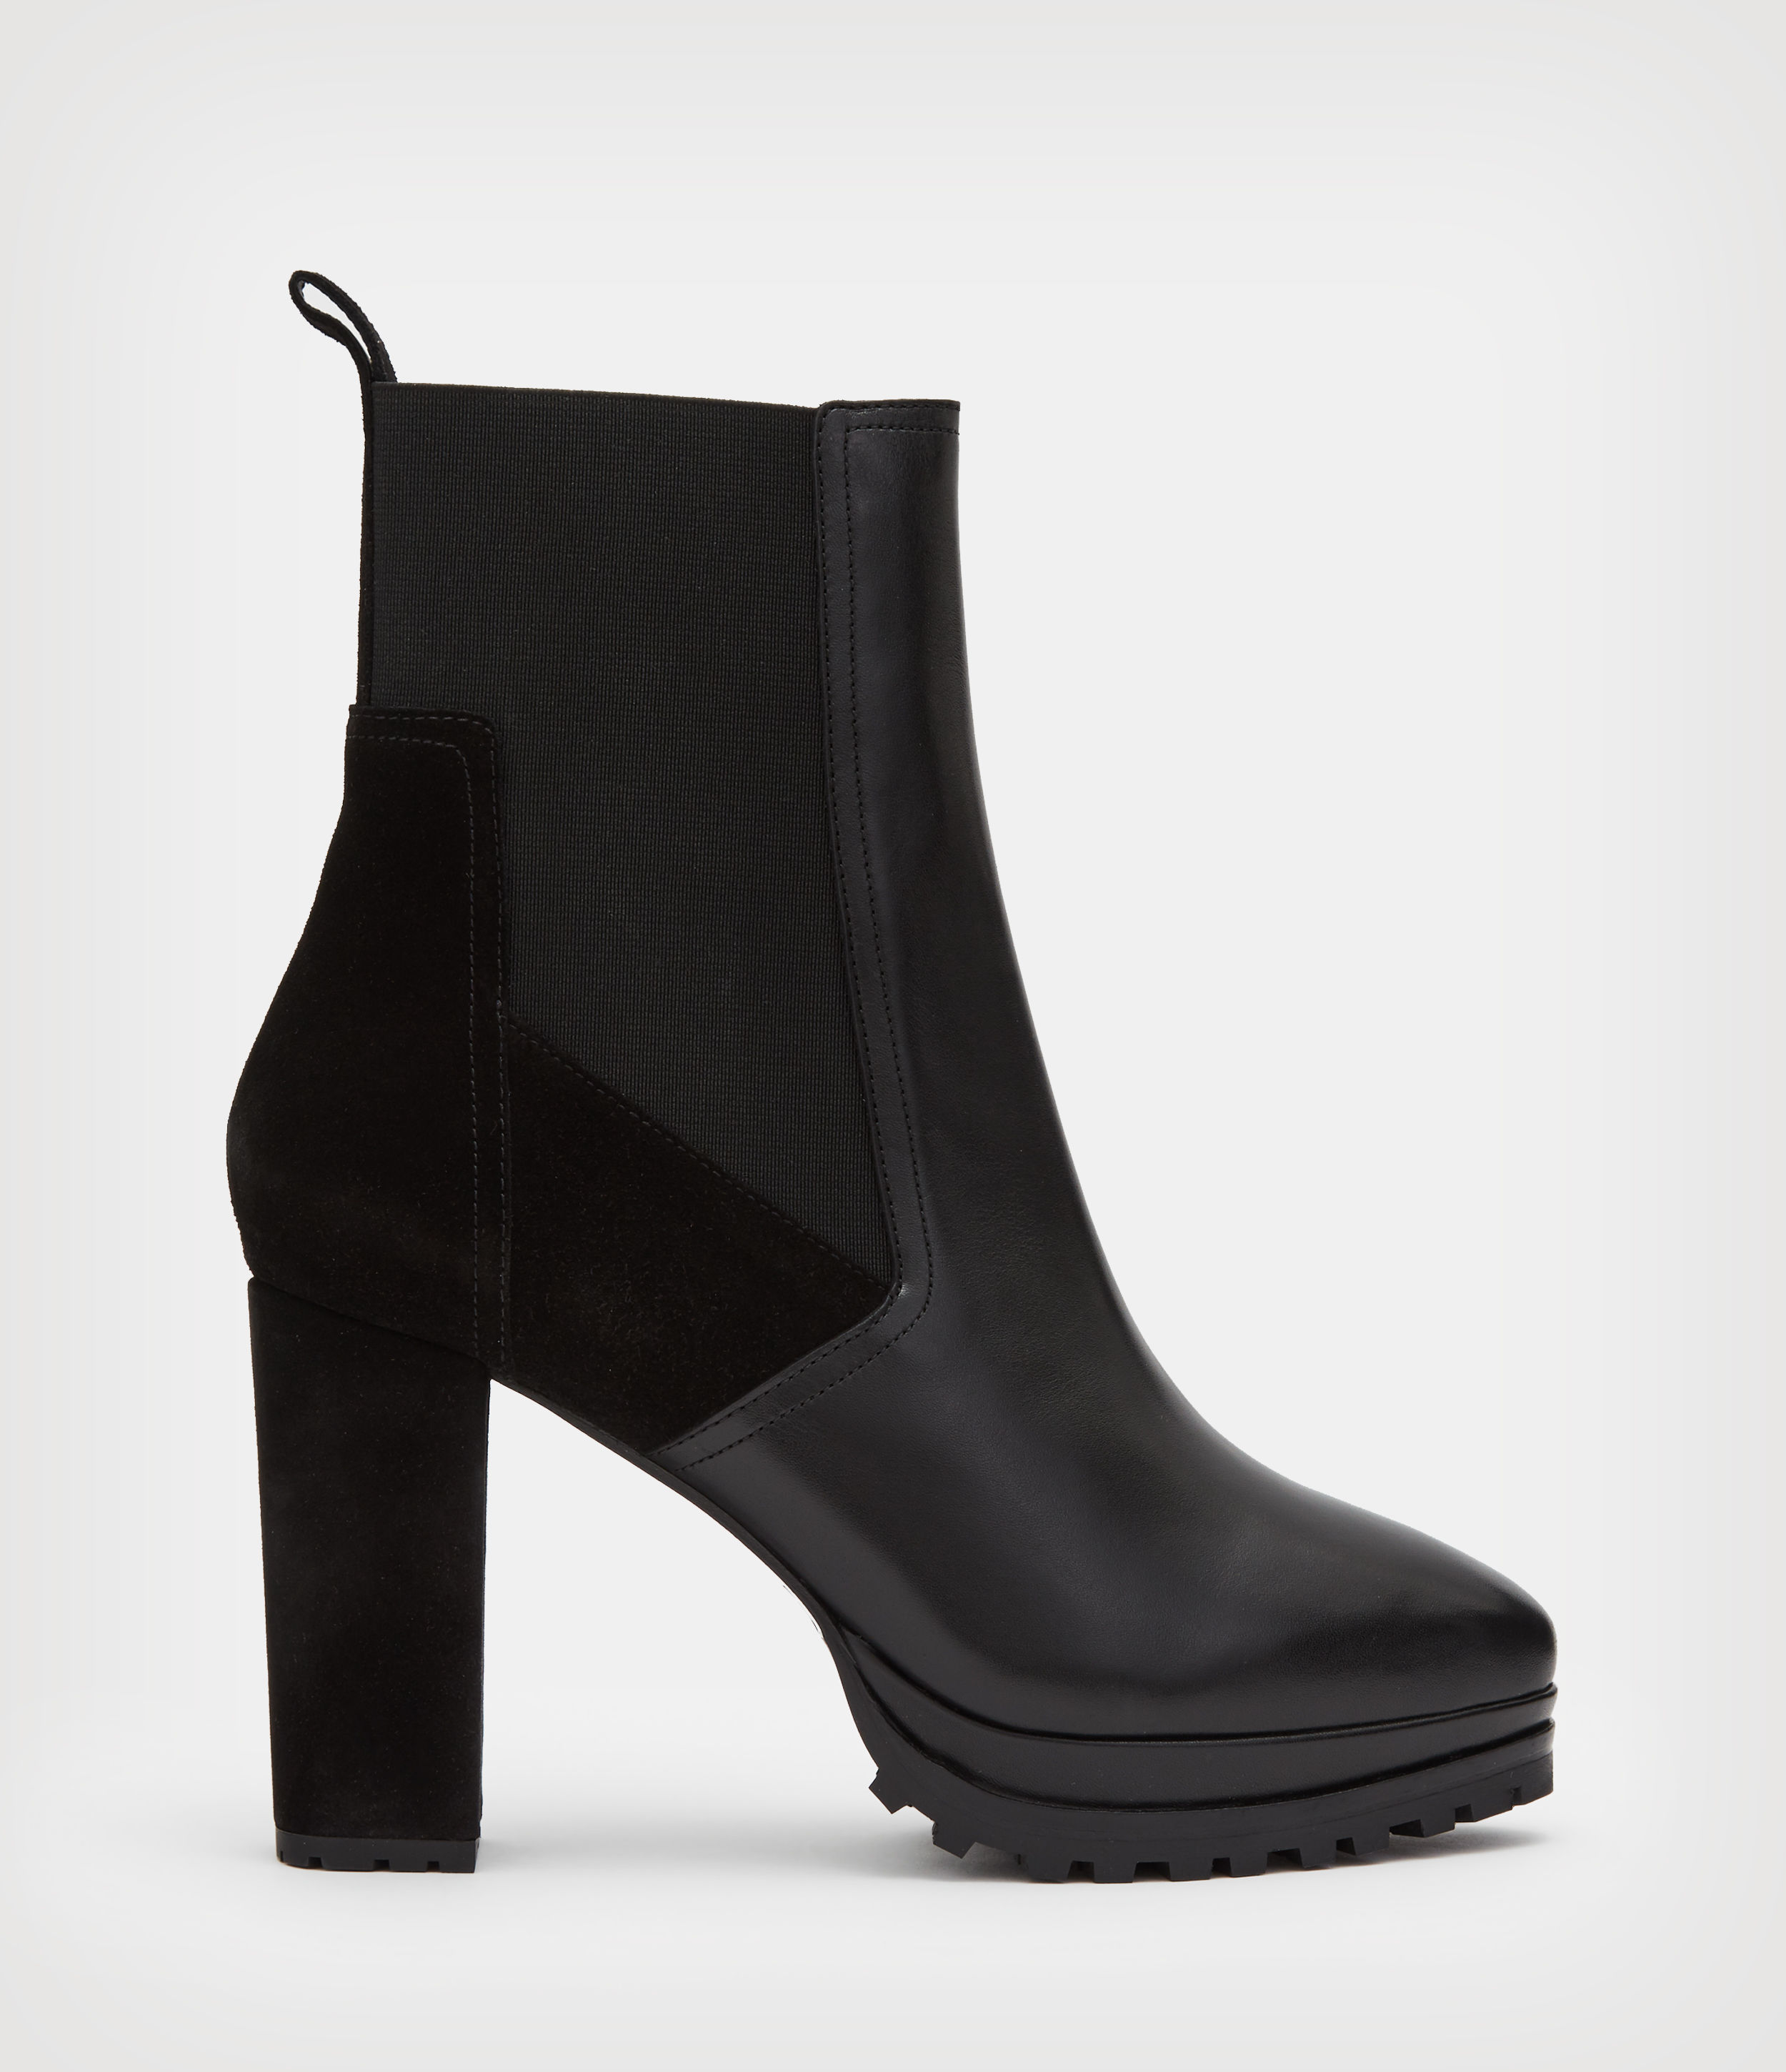 AllSaints Women’s Sahara Leather Boots, Black, Size: UK 5/US 7/EU 38